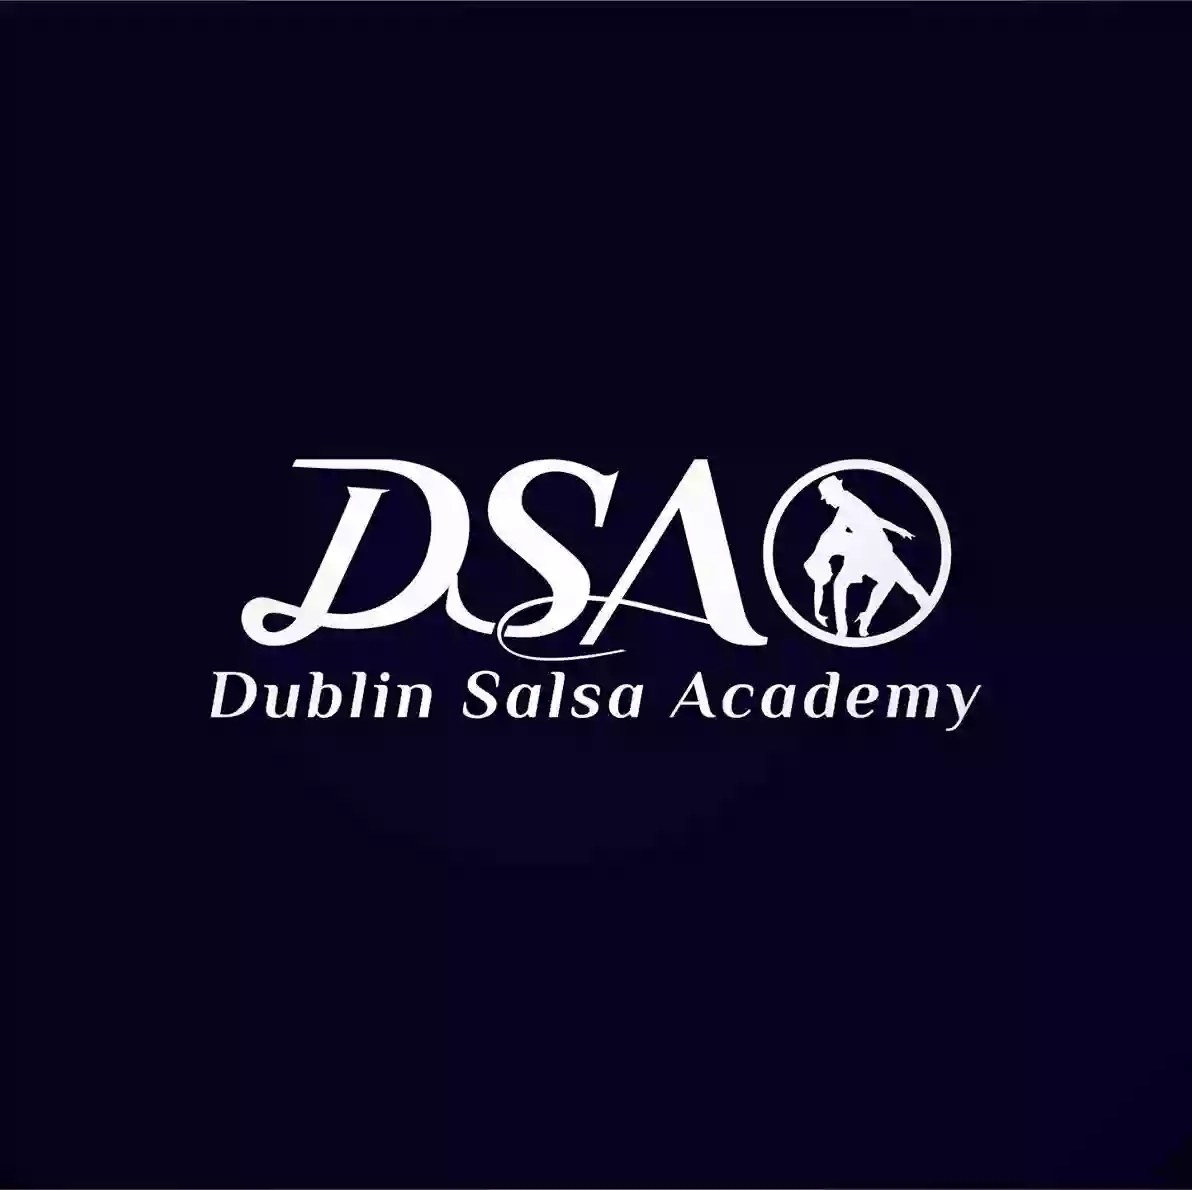 Dublin Salsa Academy - Beginner courses from April 3rd. Cuban Salsa, L.A Salsa and Bachata classes. Dublin 1. Register now